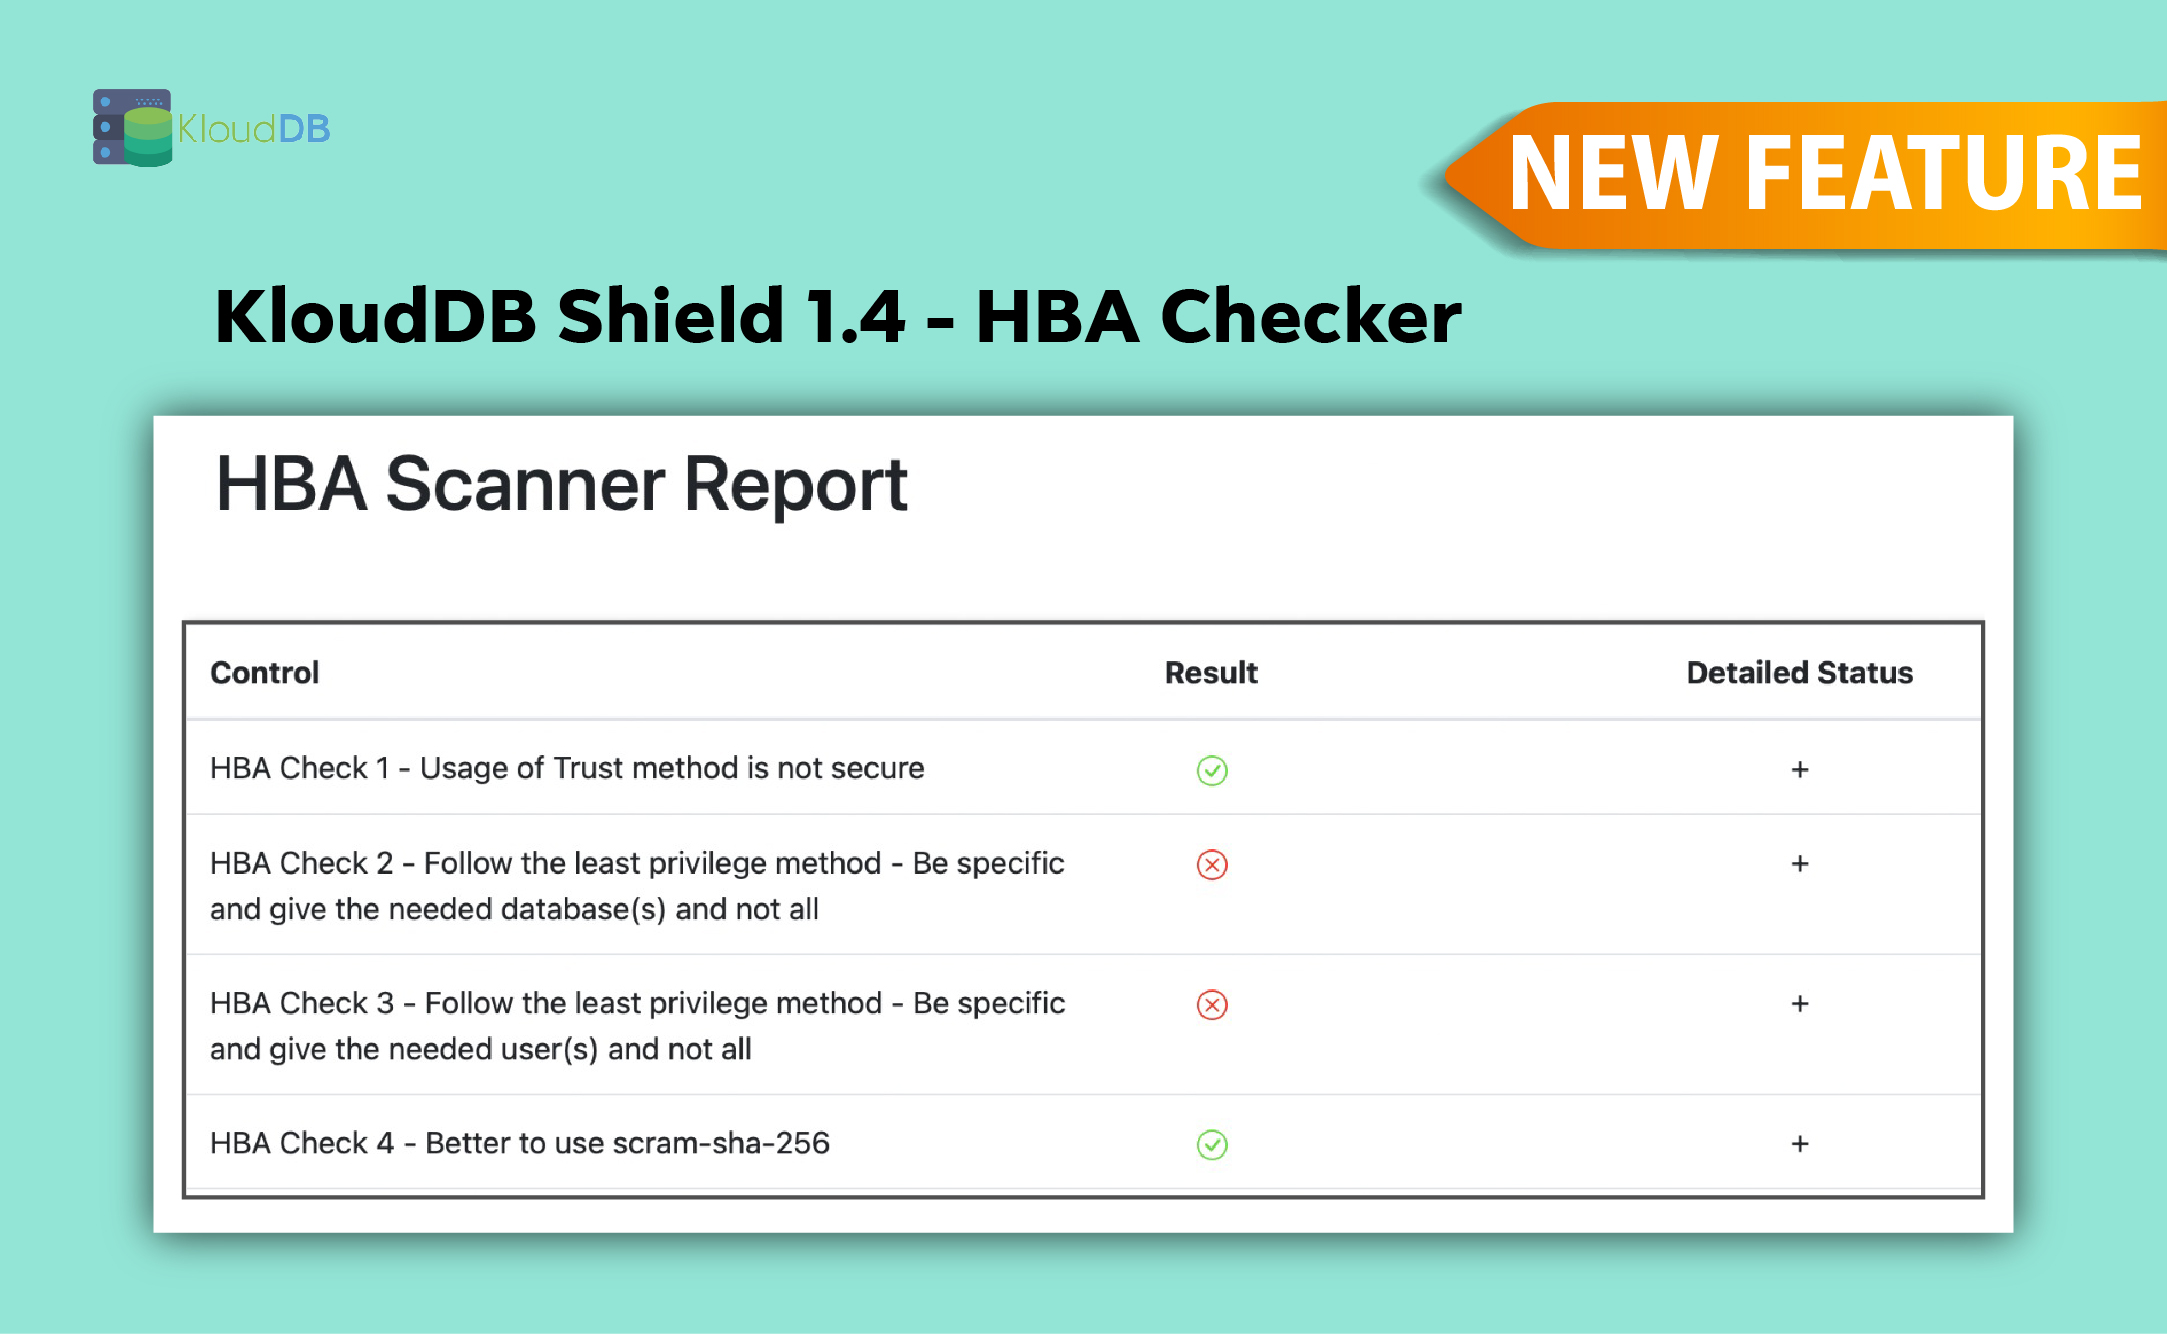 HBA Checker - KloudDB Shield 1.4